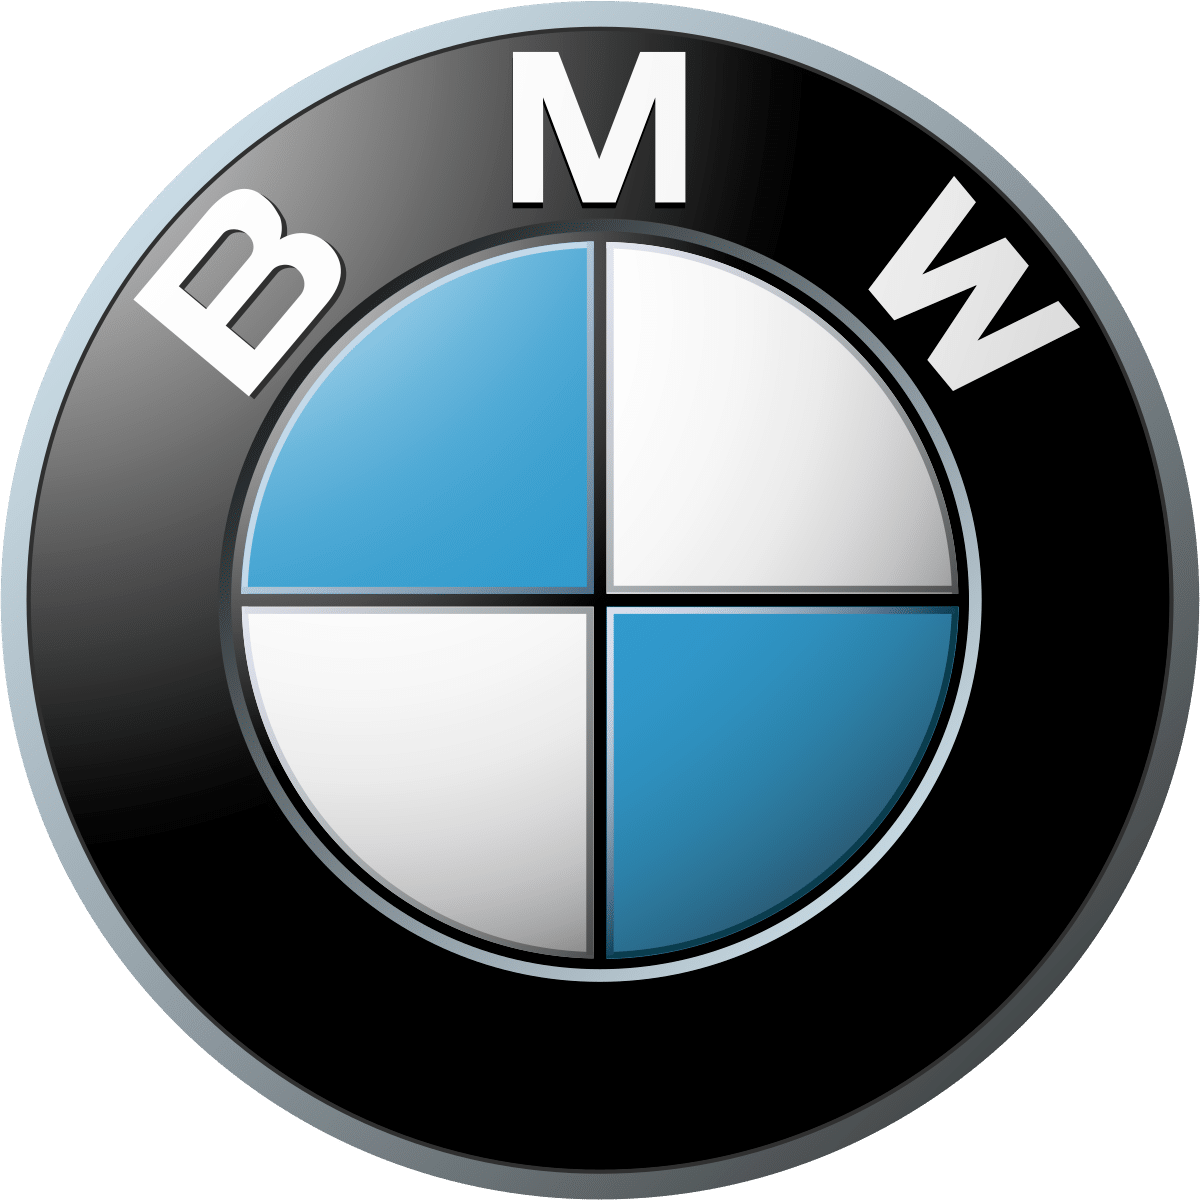 BMW, München, Tyskland